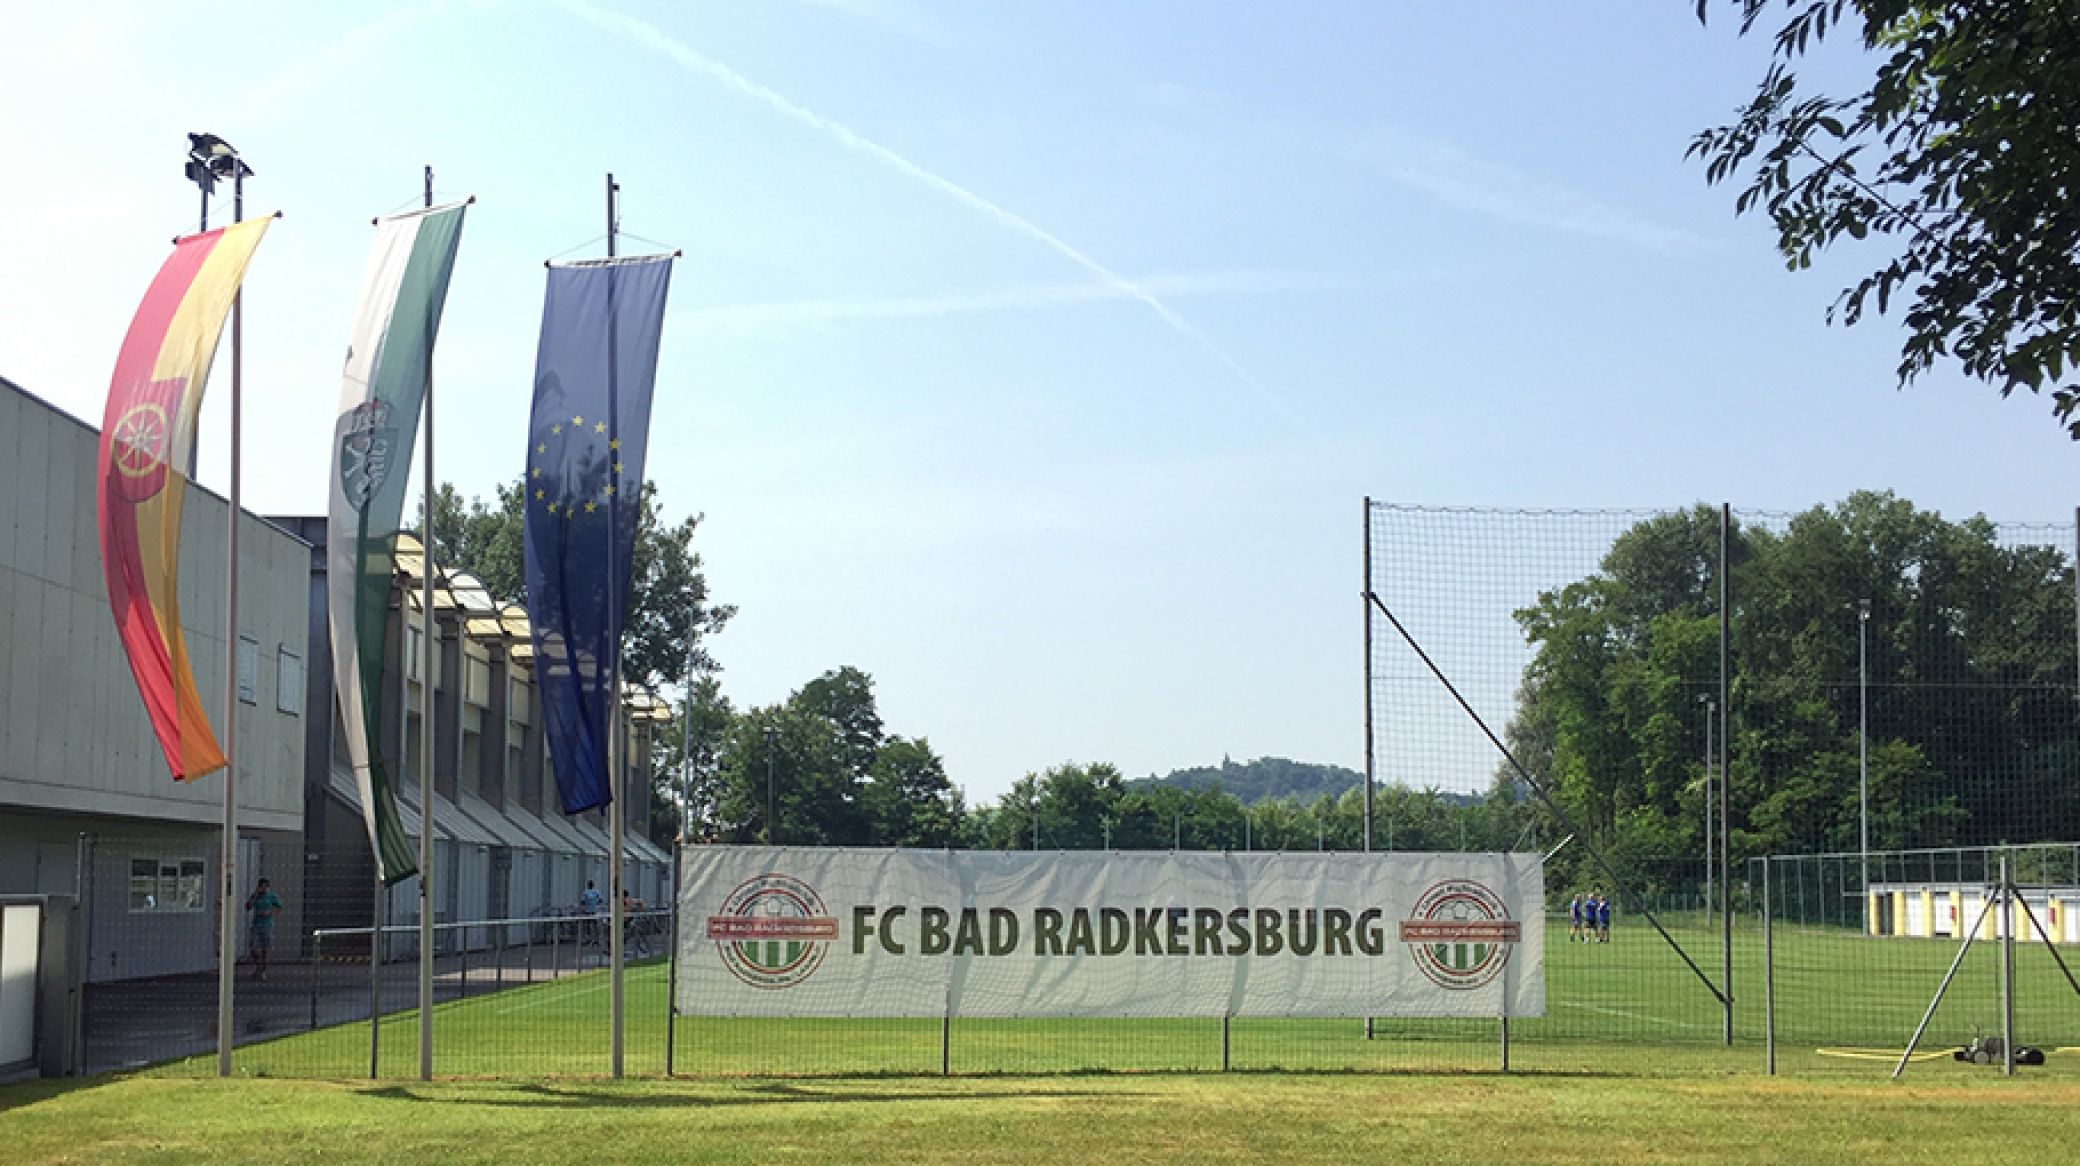 Next stop Bad Radkersburg